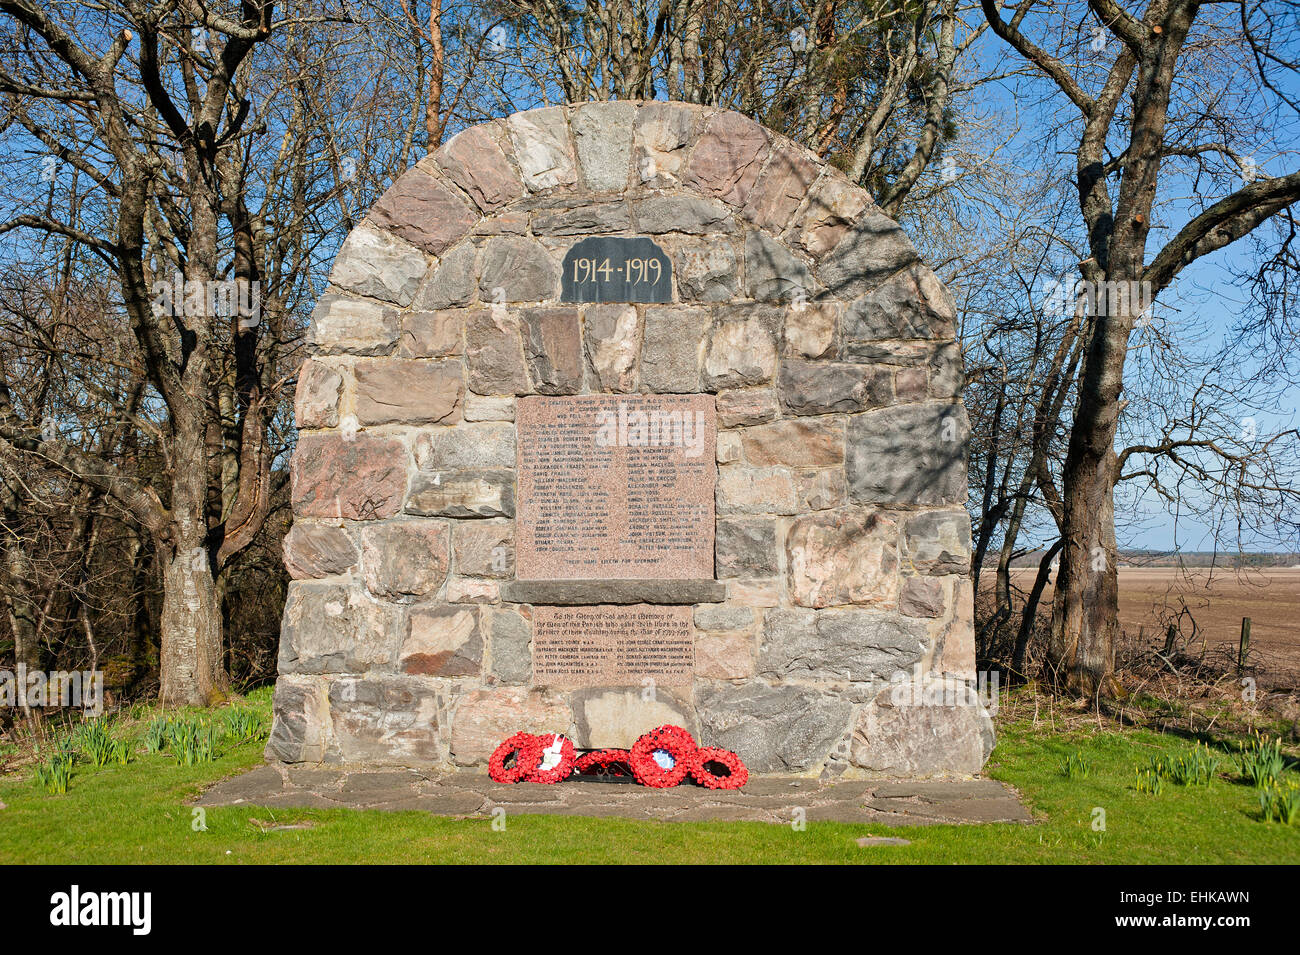 The 1914-1919 War memorial at Cawdor in Morayshire, Grampian Region Scotland. UK.  SCO 9639. Stock Photo